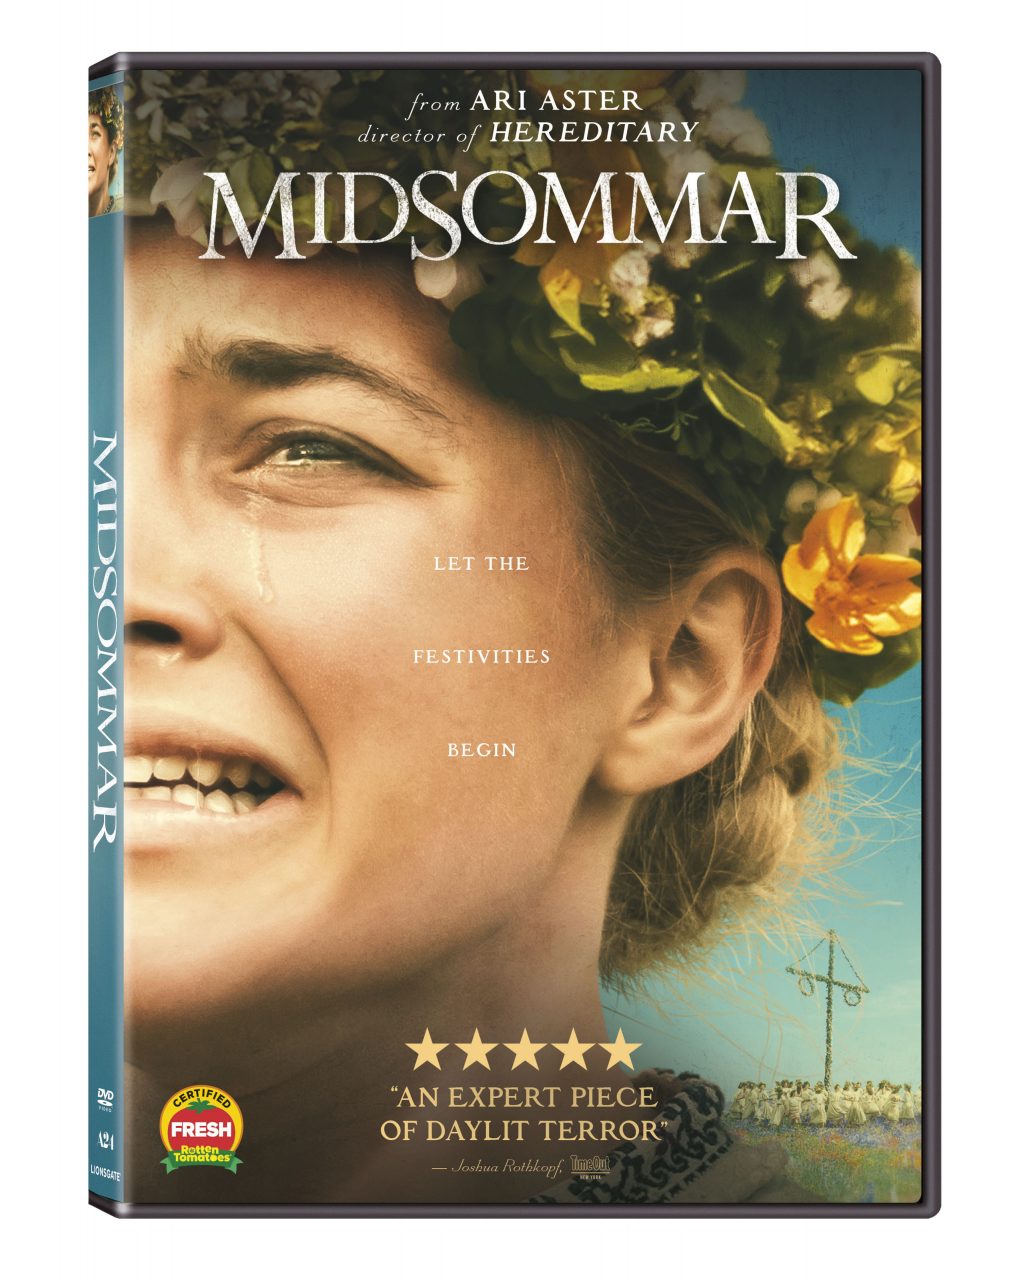 Midsommar DVD cover (Lionsgate Home Enteretainment)